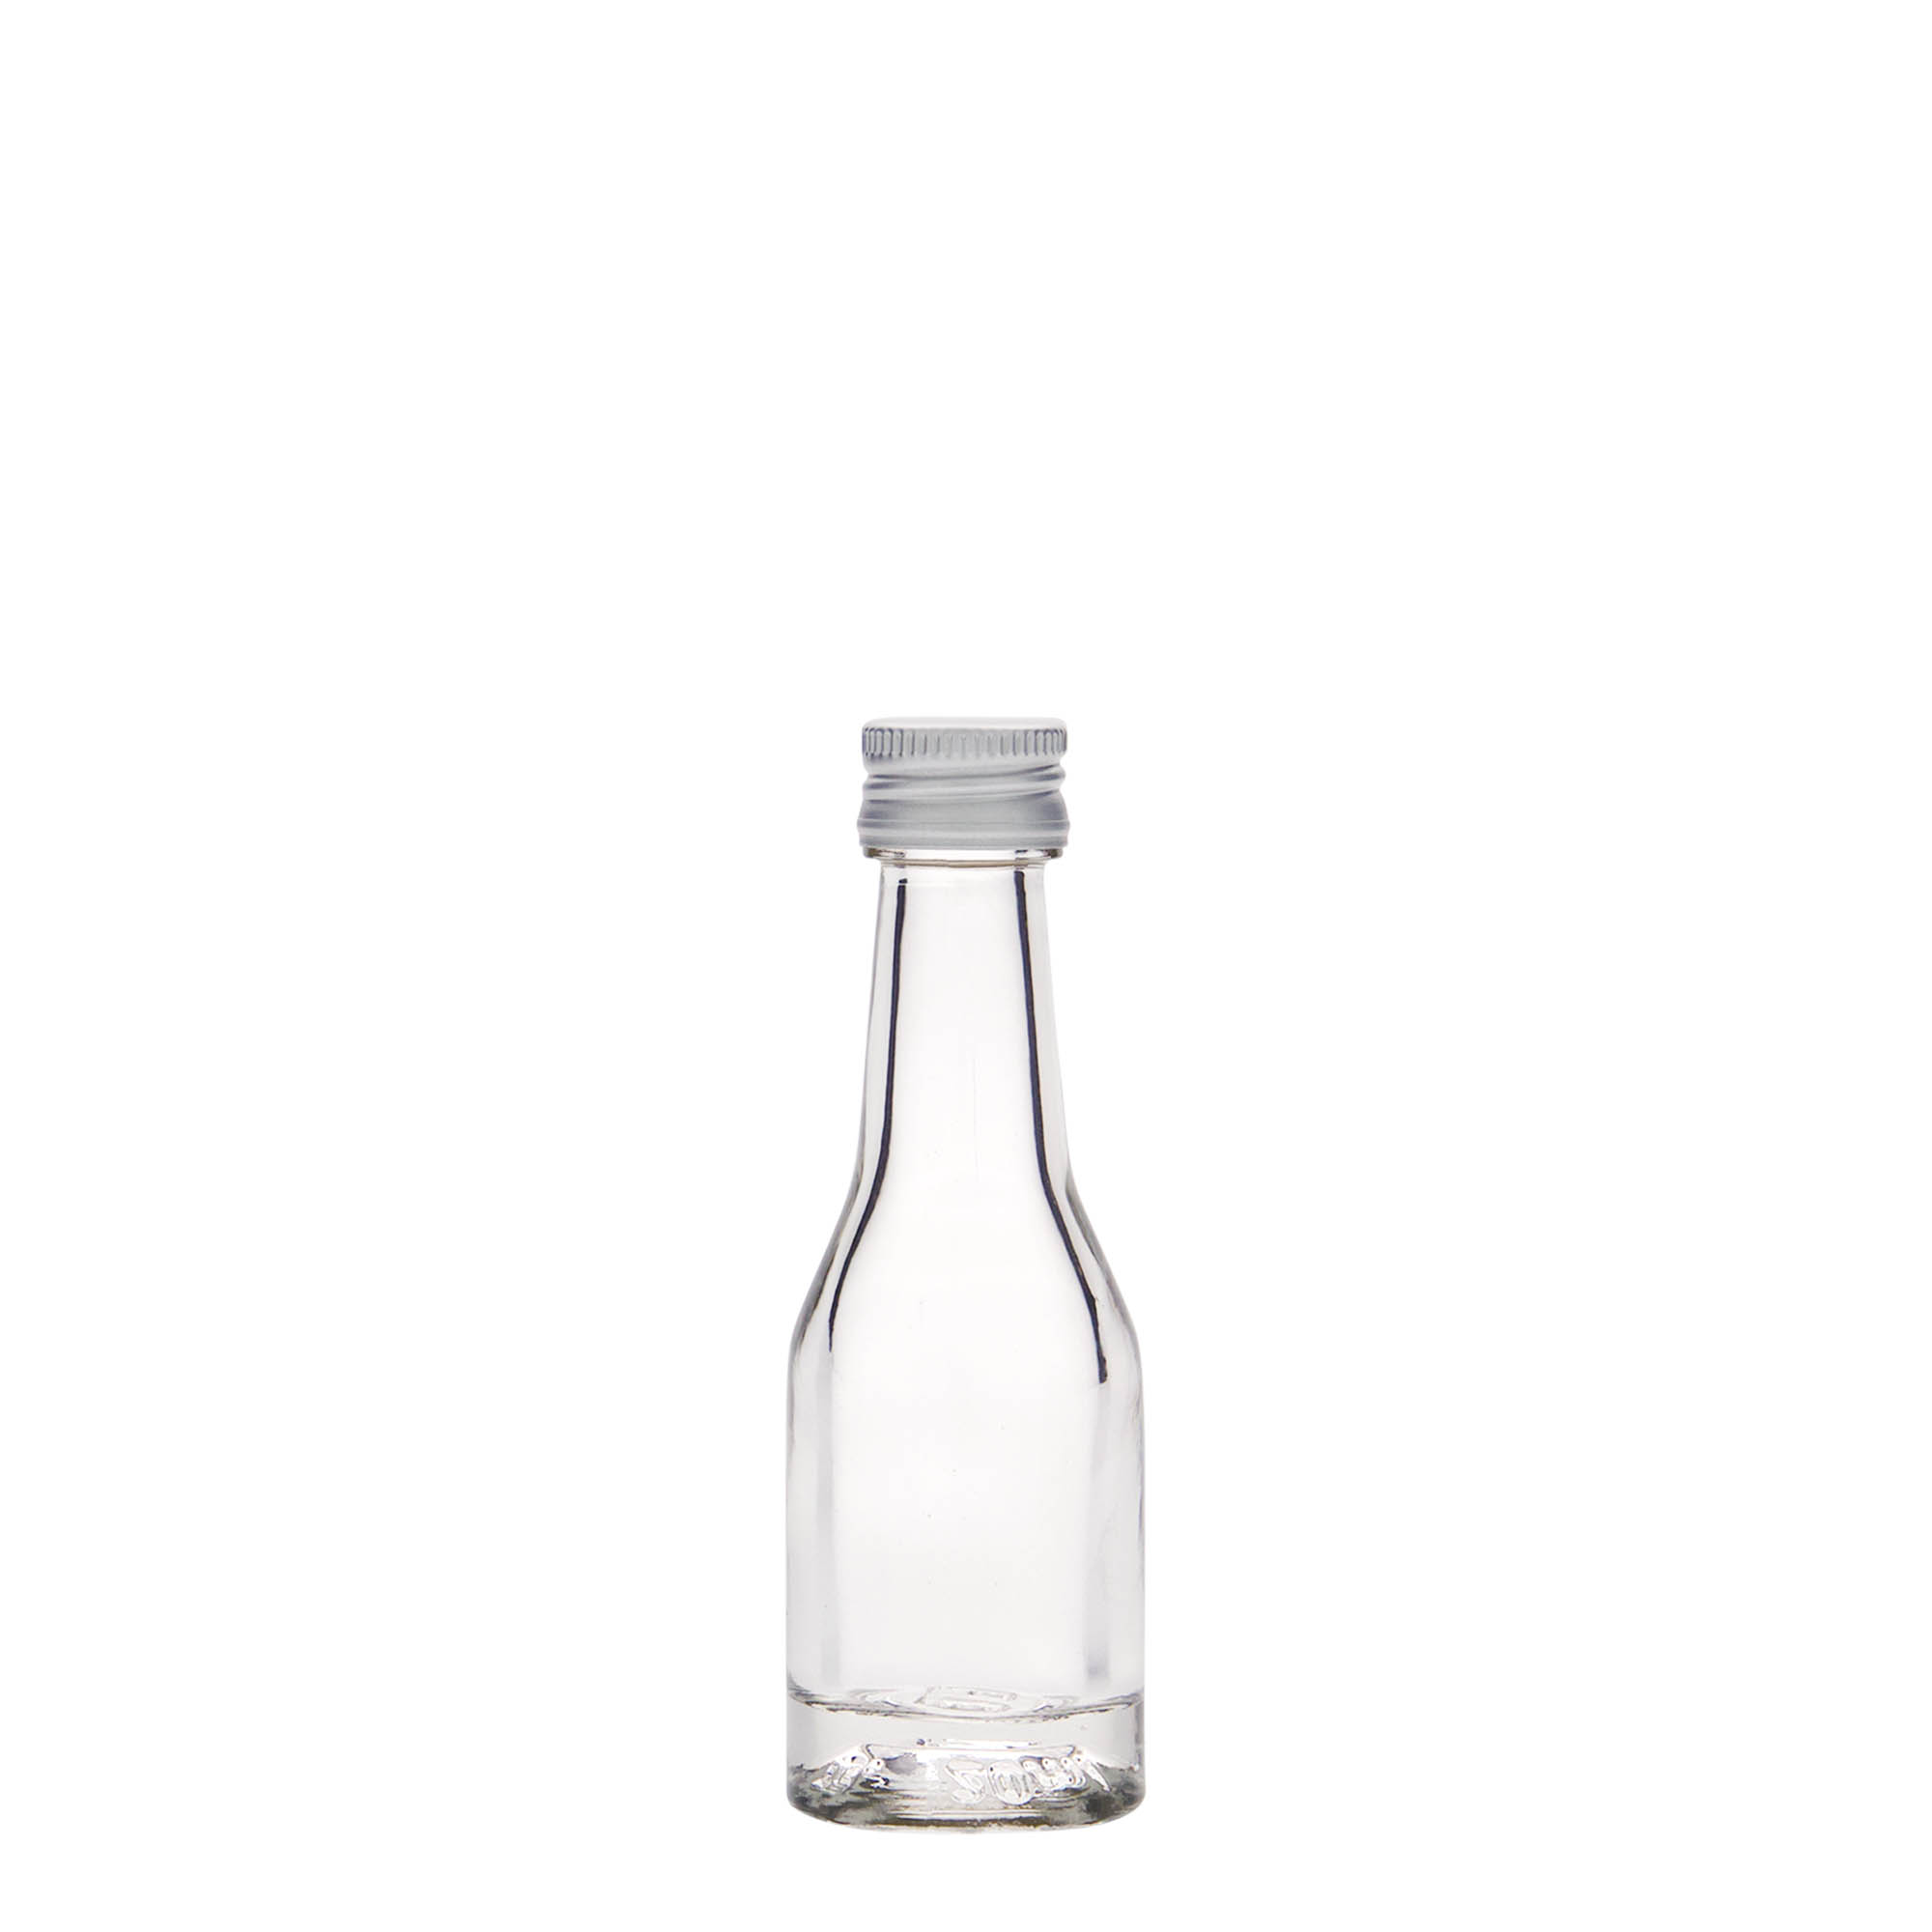 20 ml glass bottle 'Weinschlegel', closure: PP 18